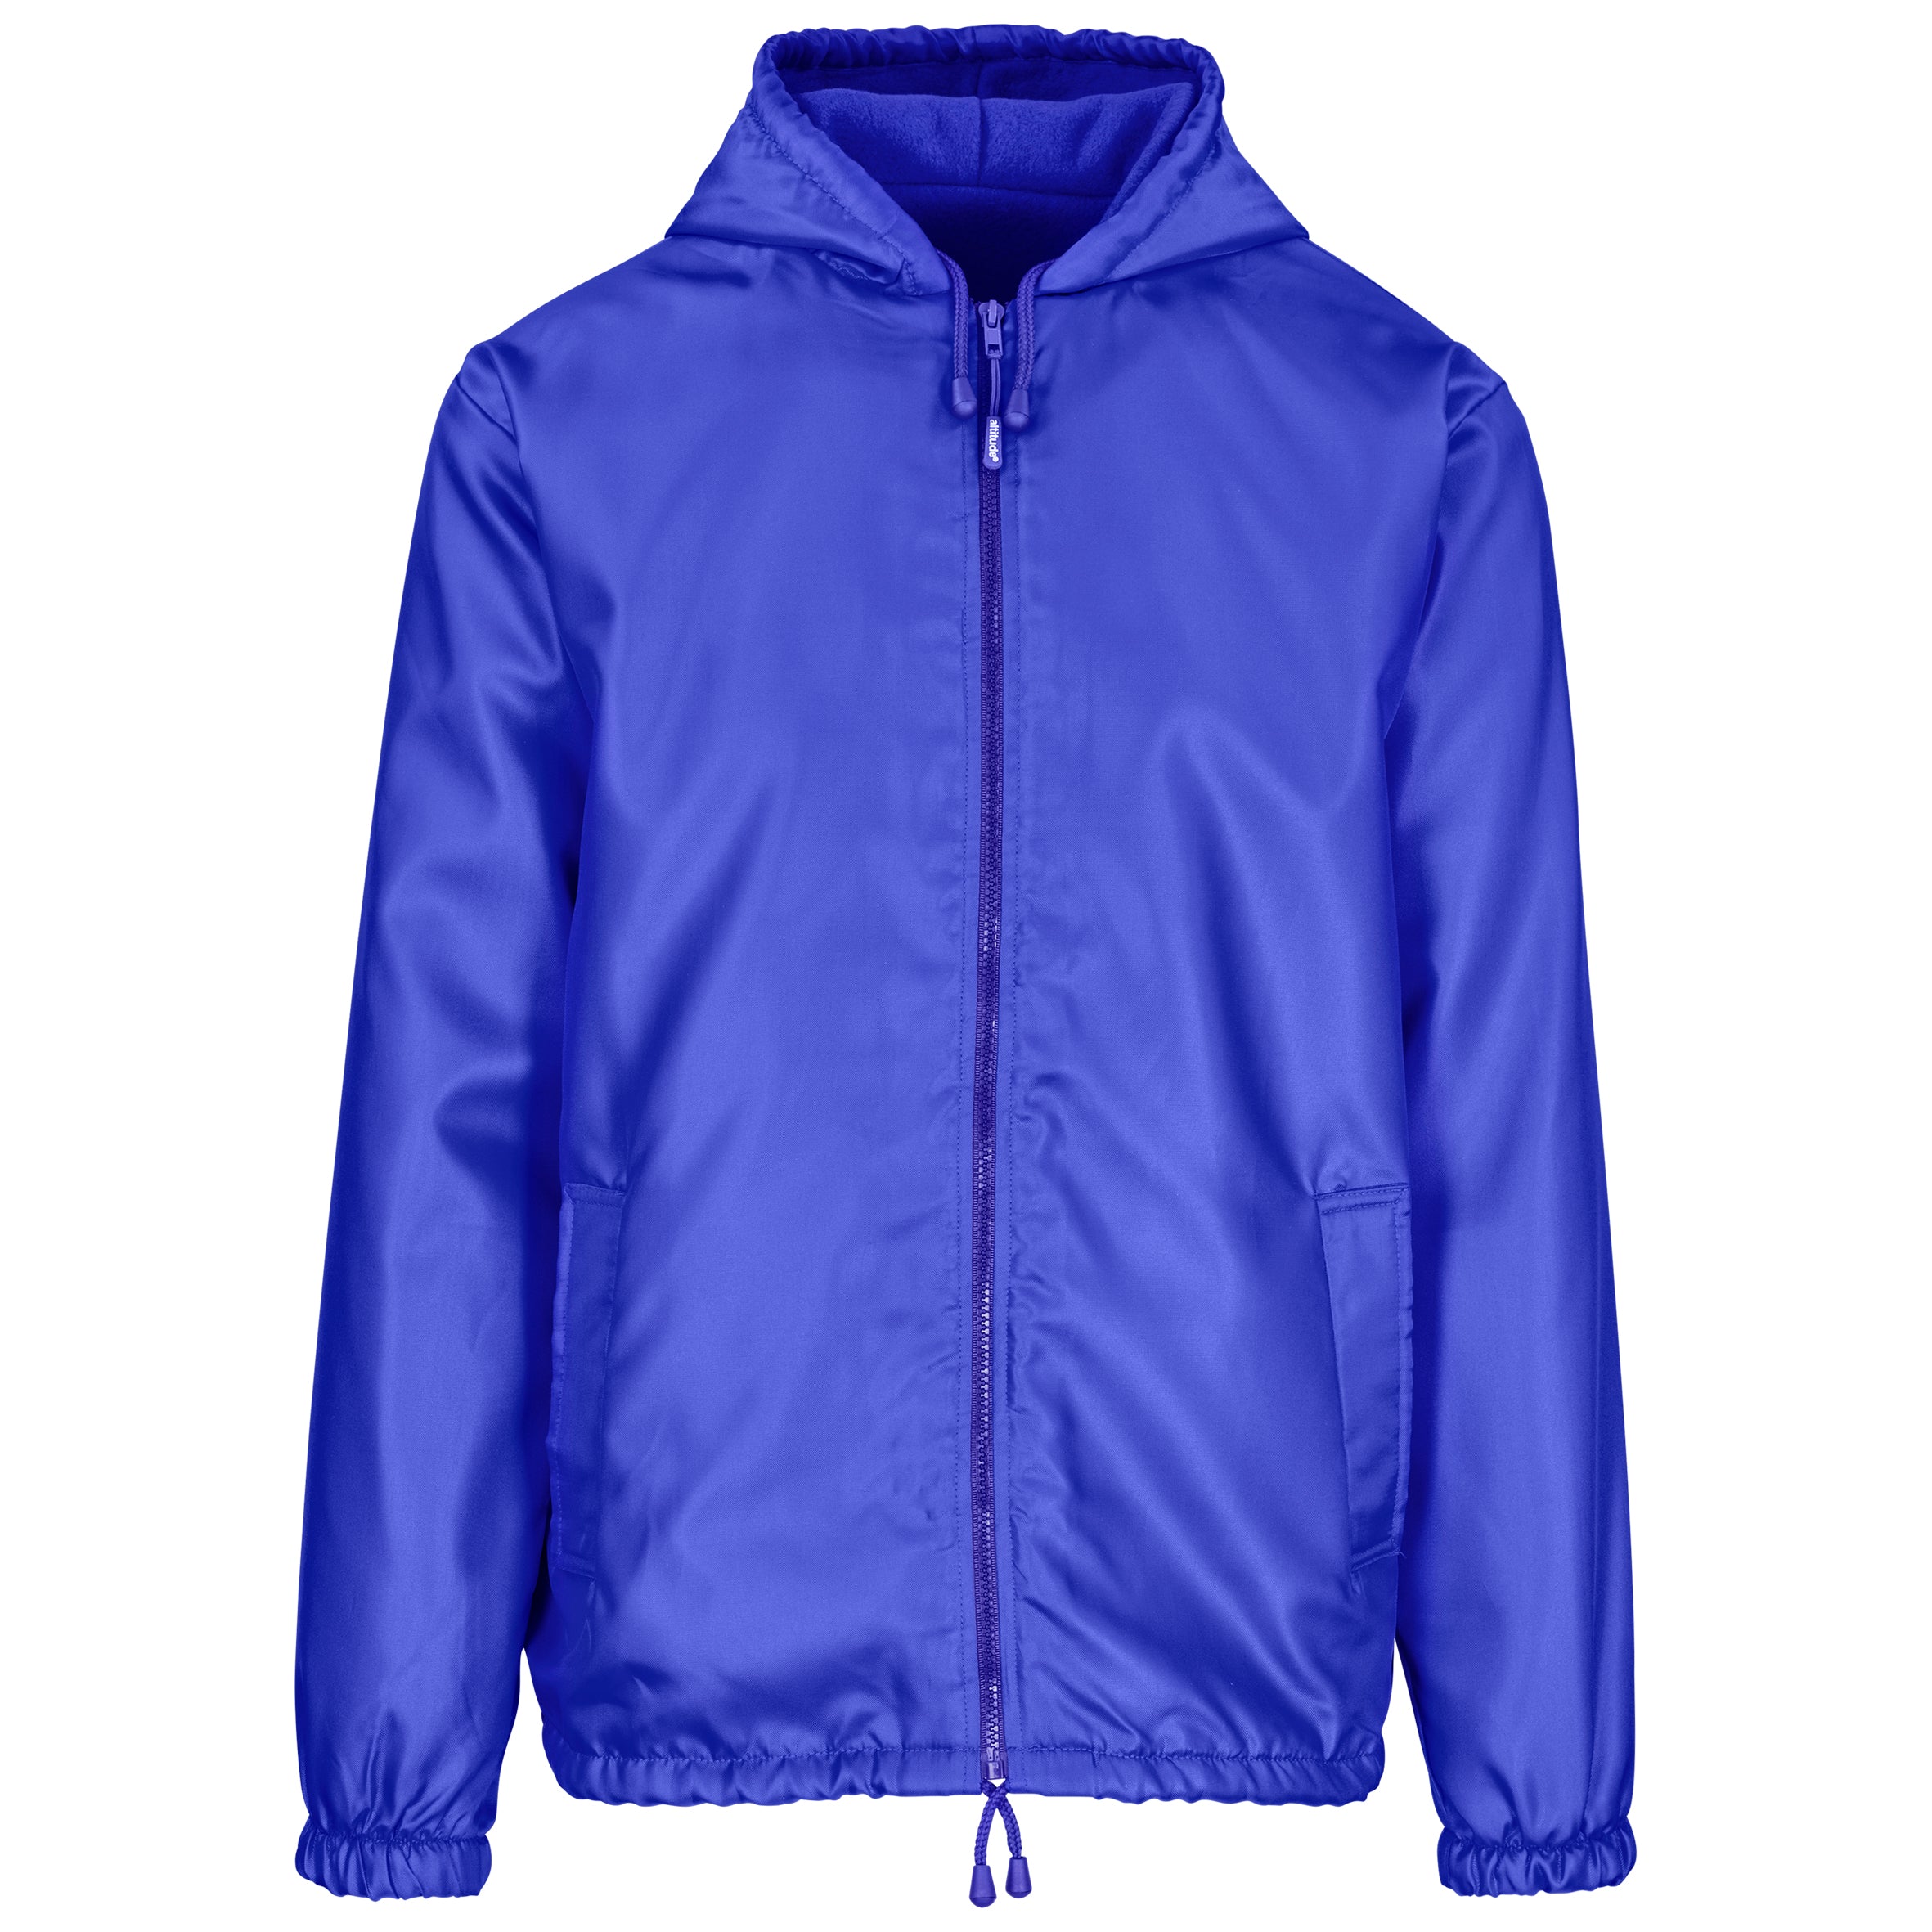 Unisex Alti-Mac Fleece Lined Jacket L / Royal Blue / RB